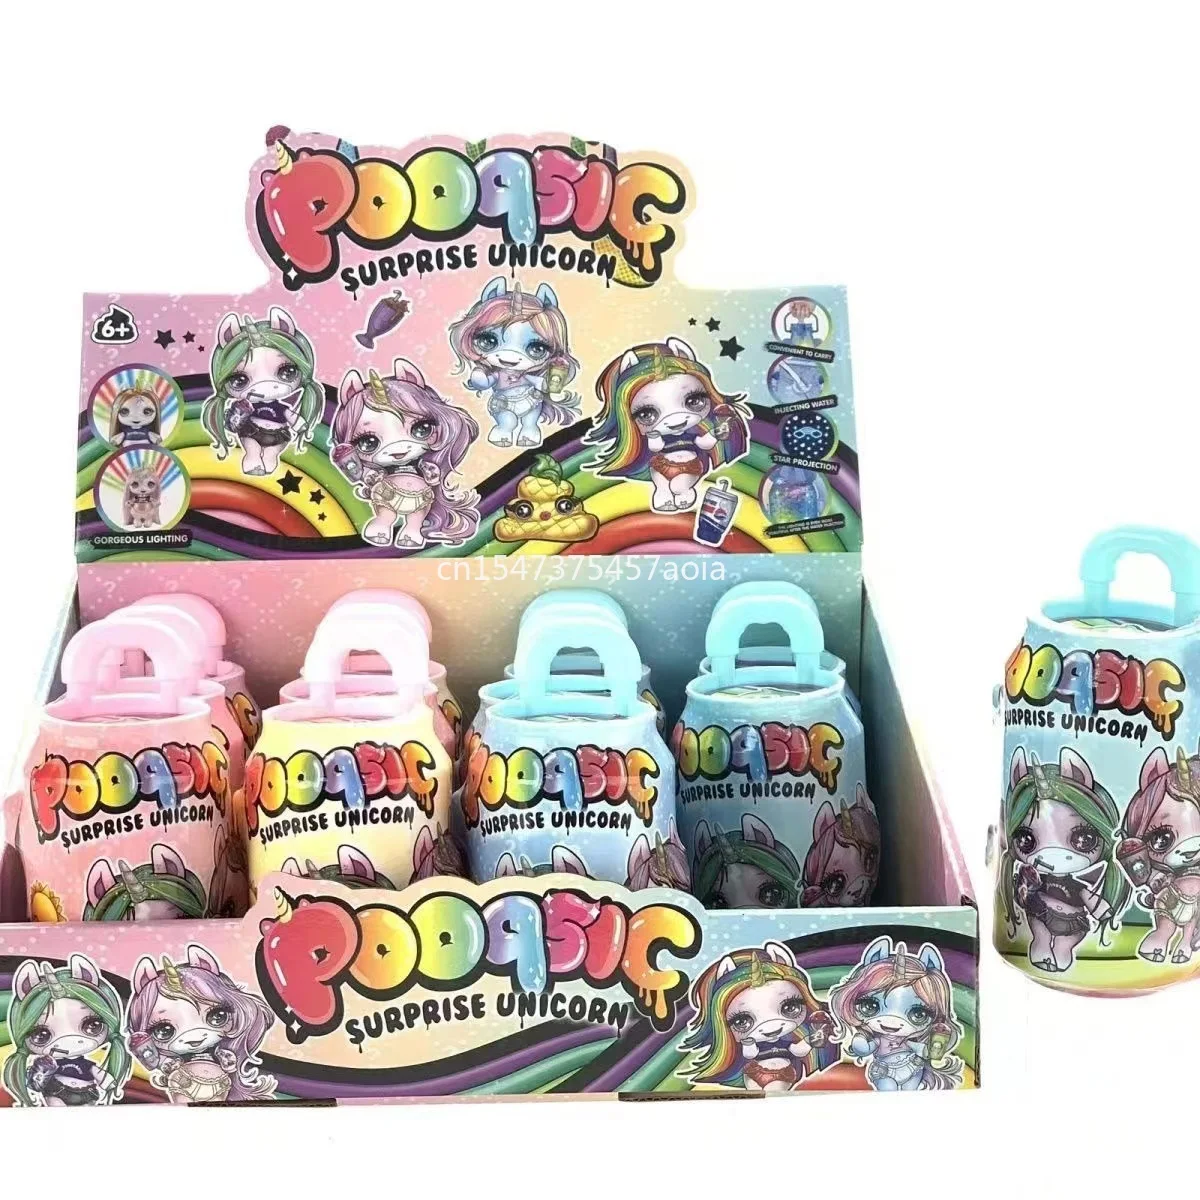 Poopsie slime toy party supplies, poosie unicorn slime plates and cups  16pcs, rainbow unicorn decor